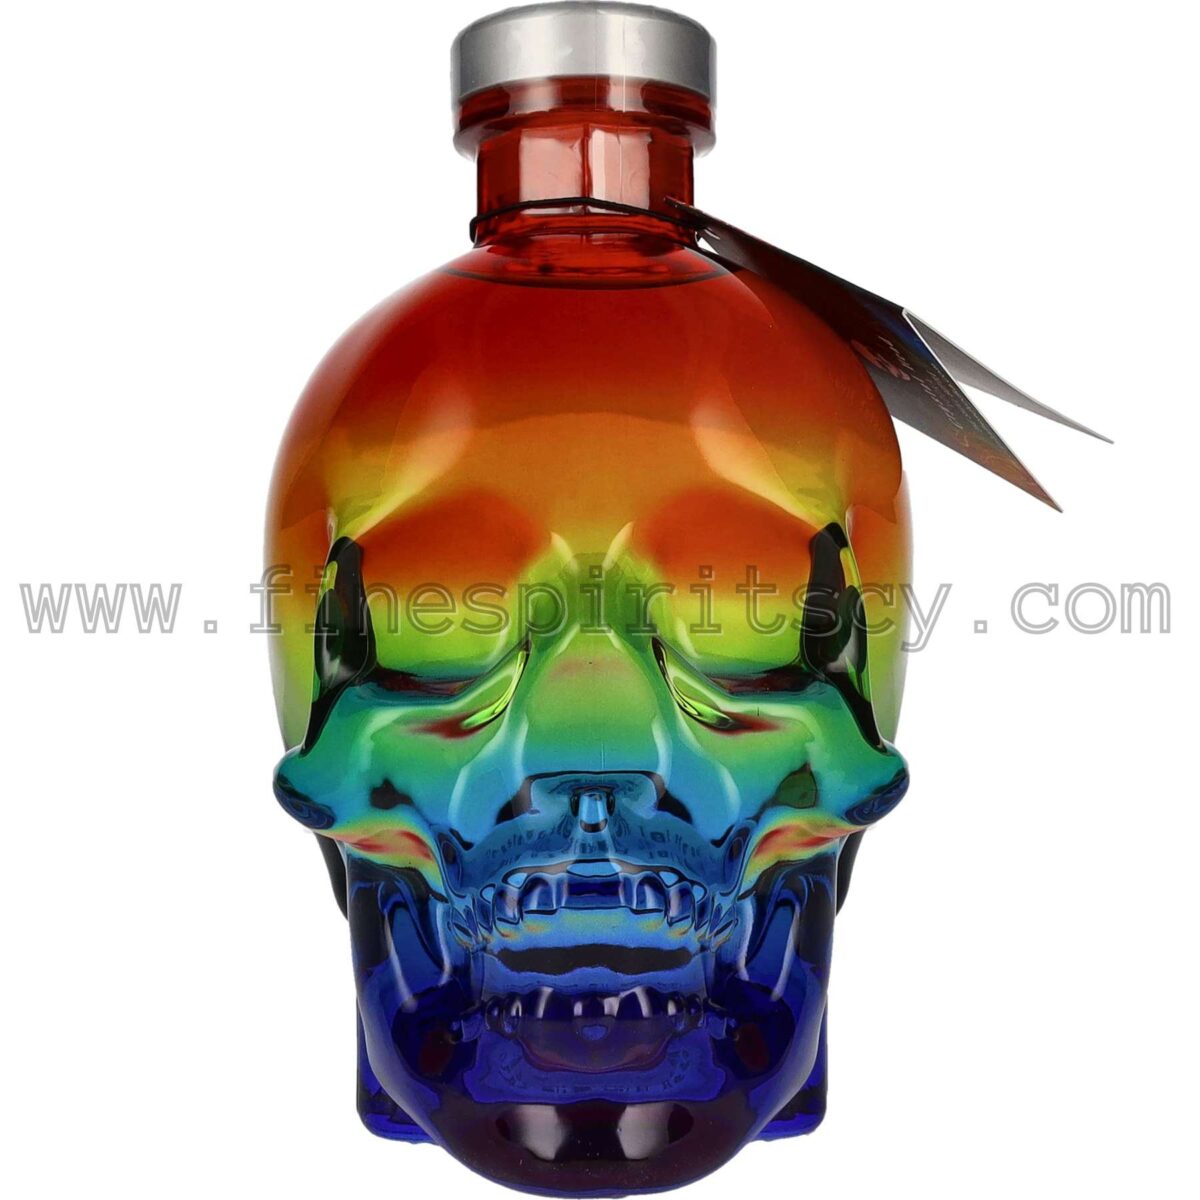 Crystal Head Pride Edition Vodka Front Fine Spirits Cy Cyprus 700ml 70cl 0.7L Order Online